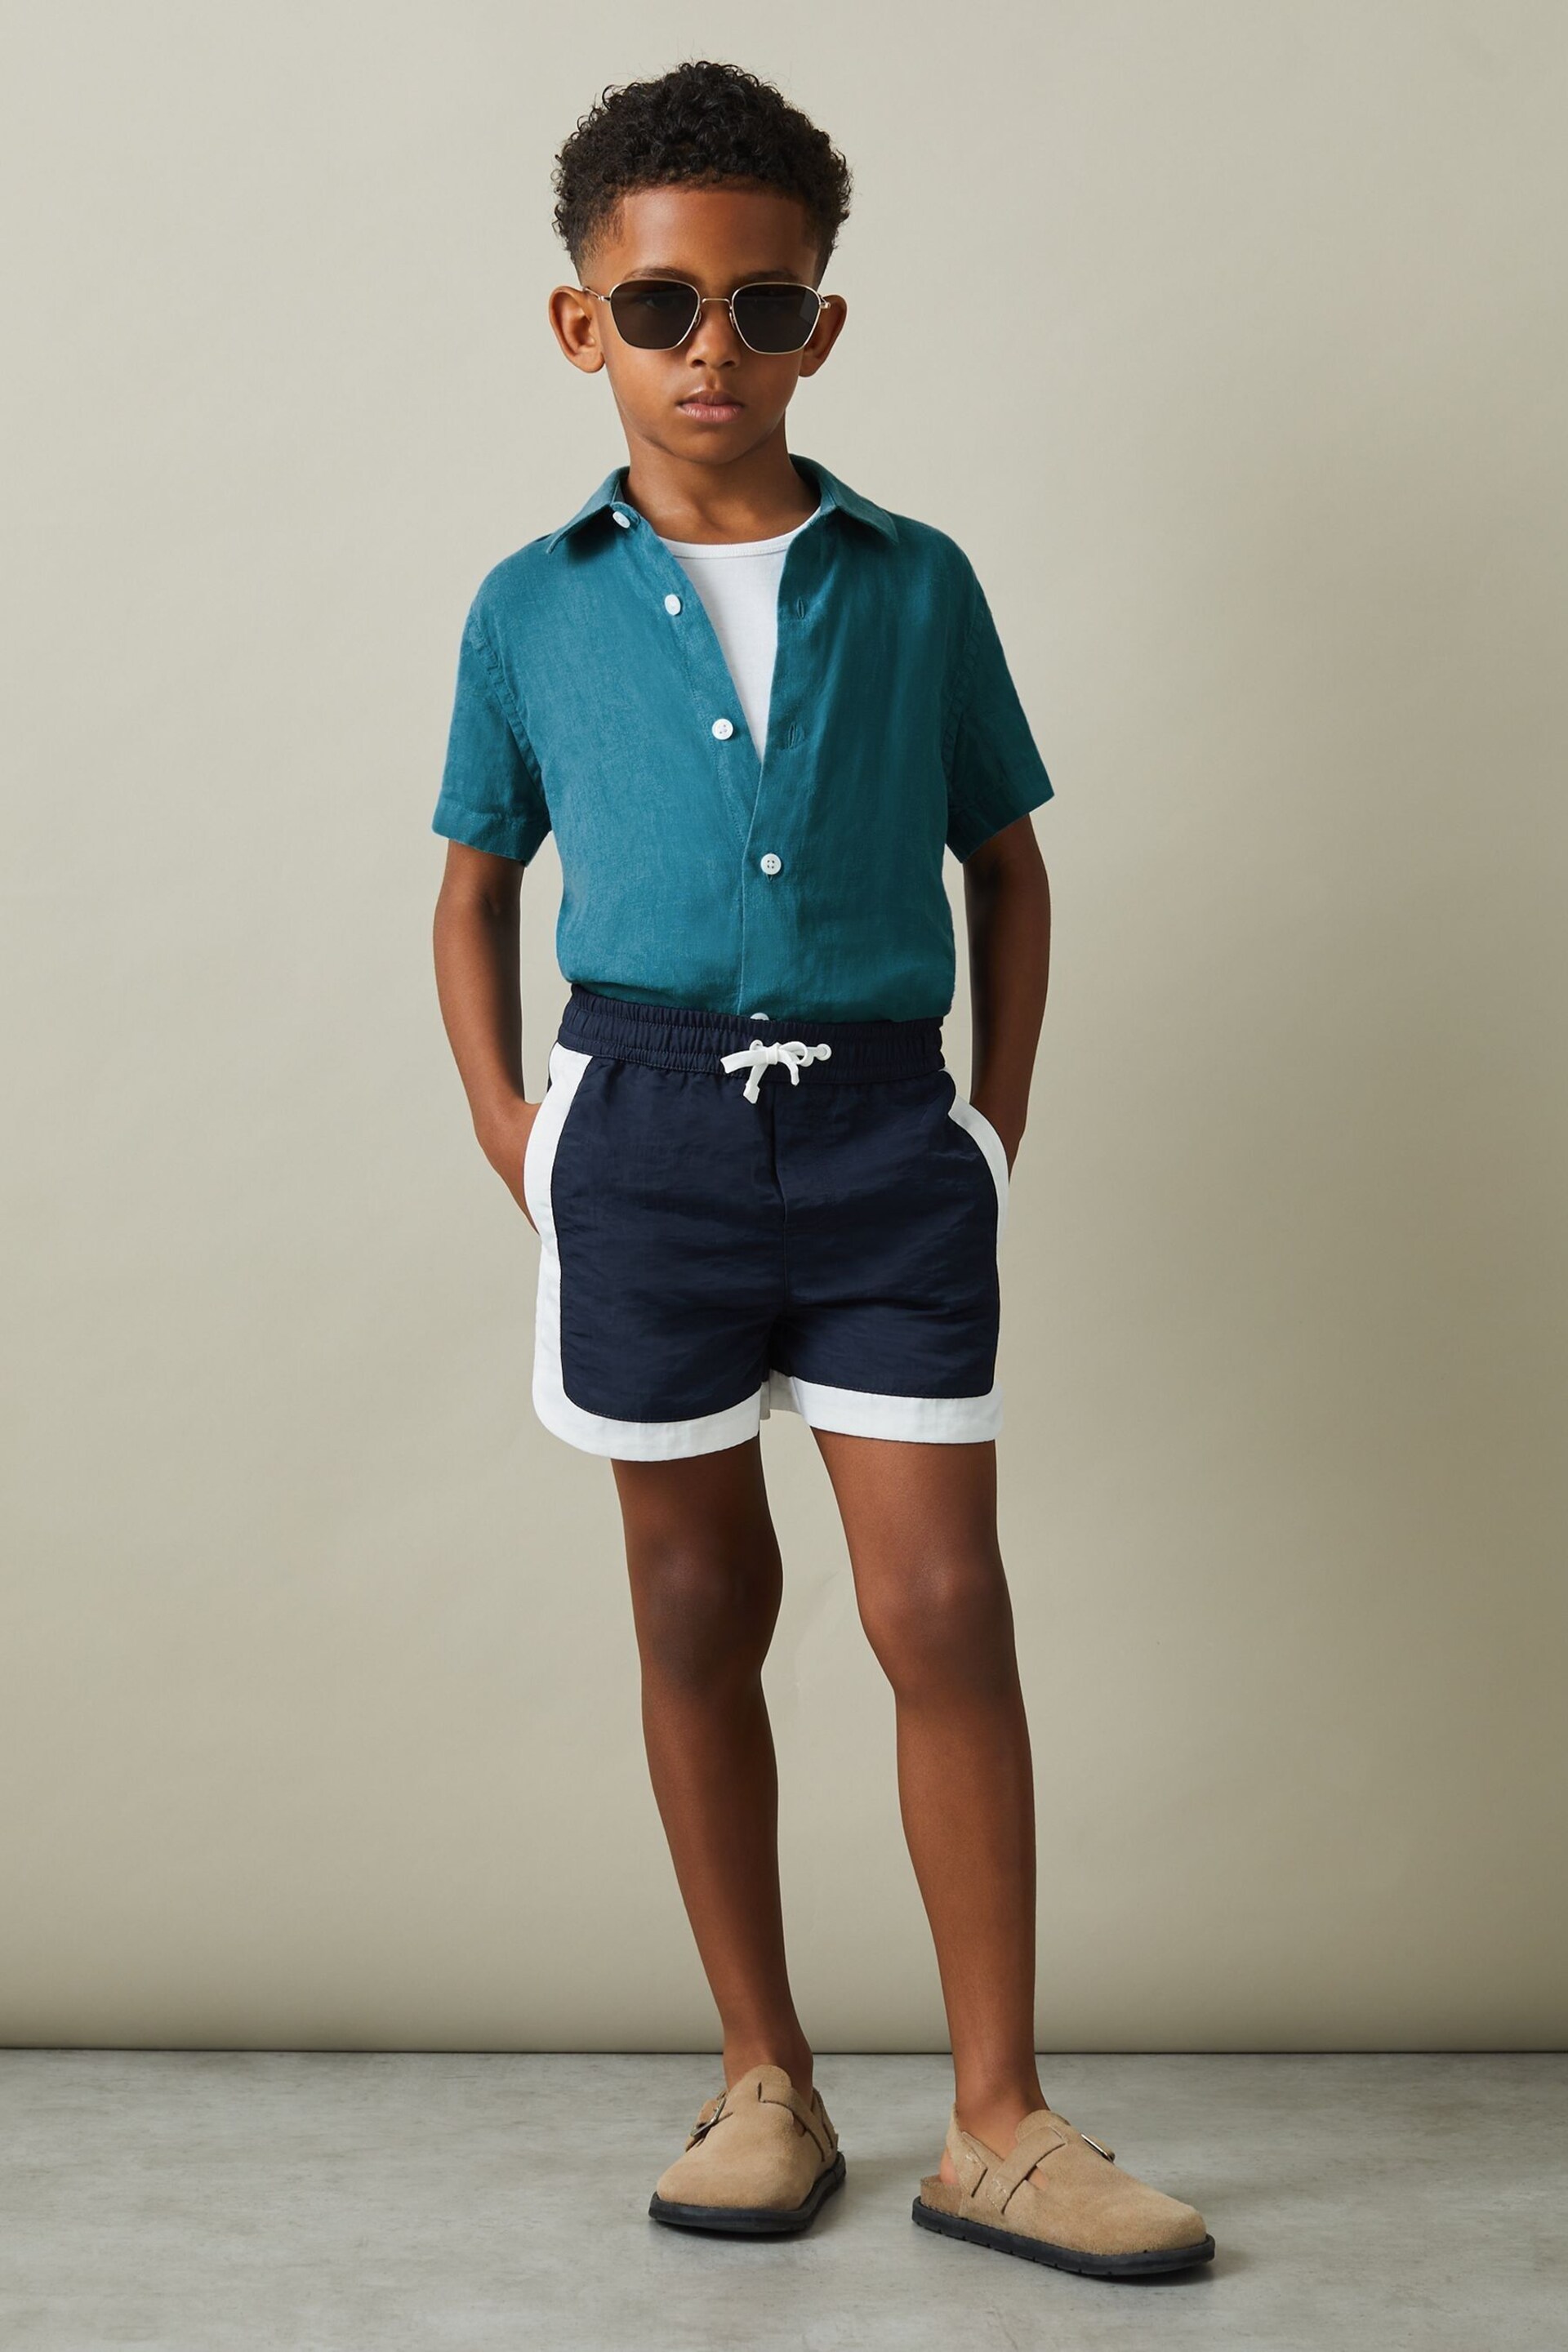 Reiss Seafoam Holiday Junior Short Sleeve Linen Shirt - Image 1 of 4